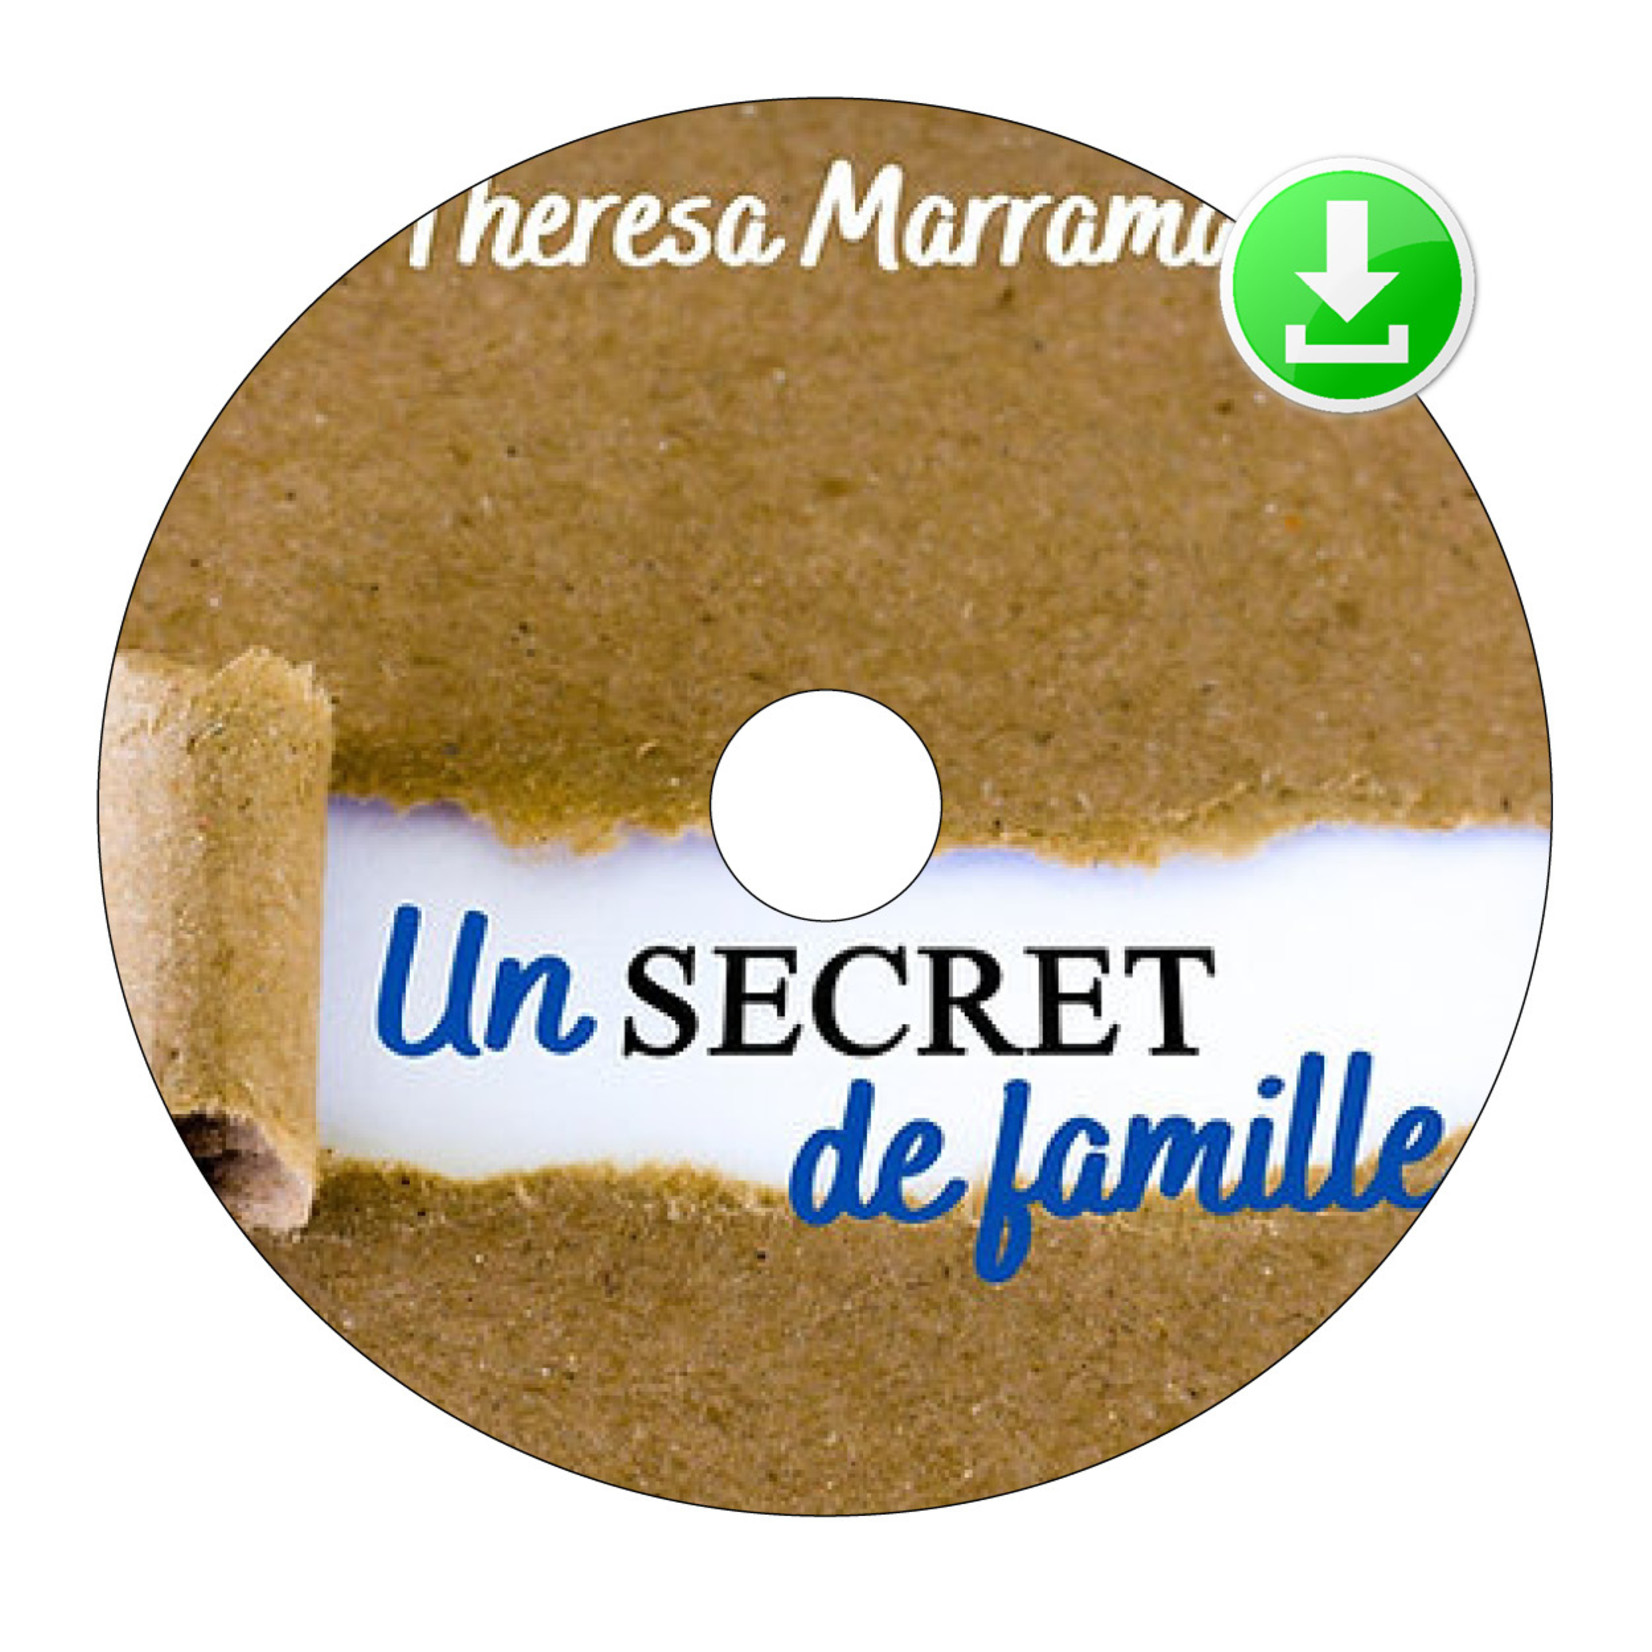 Theresa Marrama Un secret de famille - Luisterboek